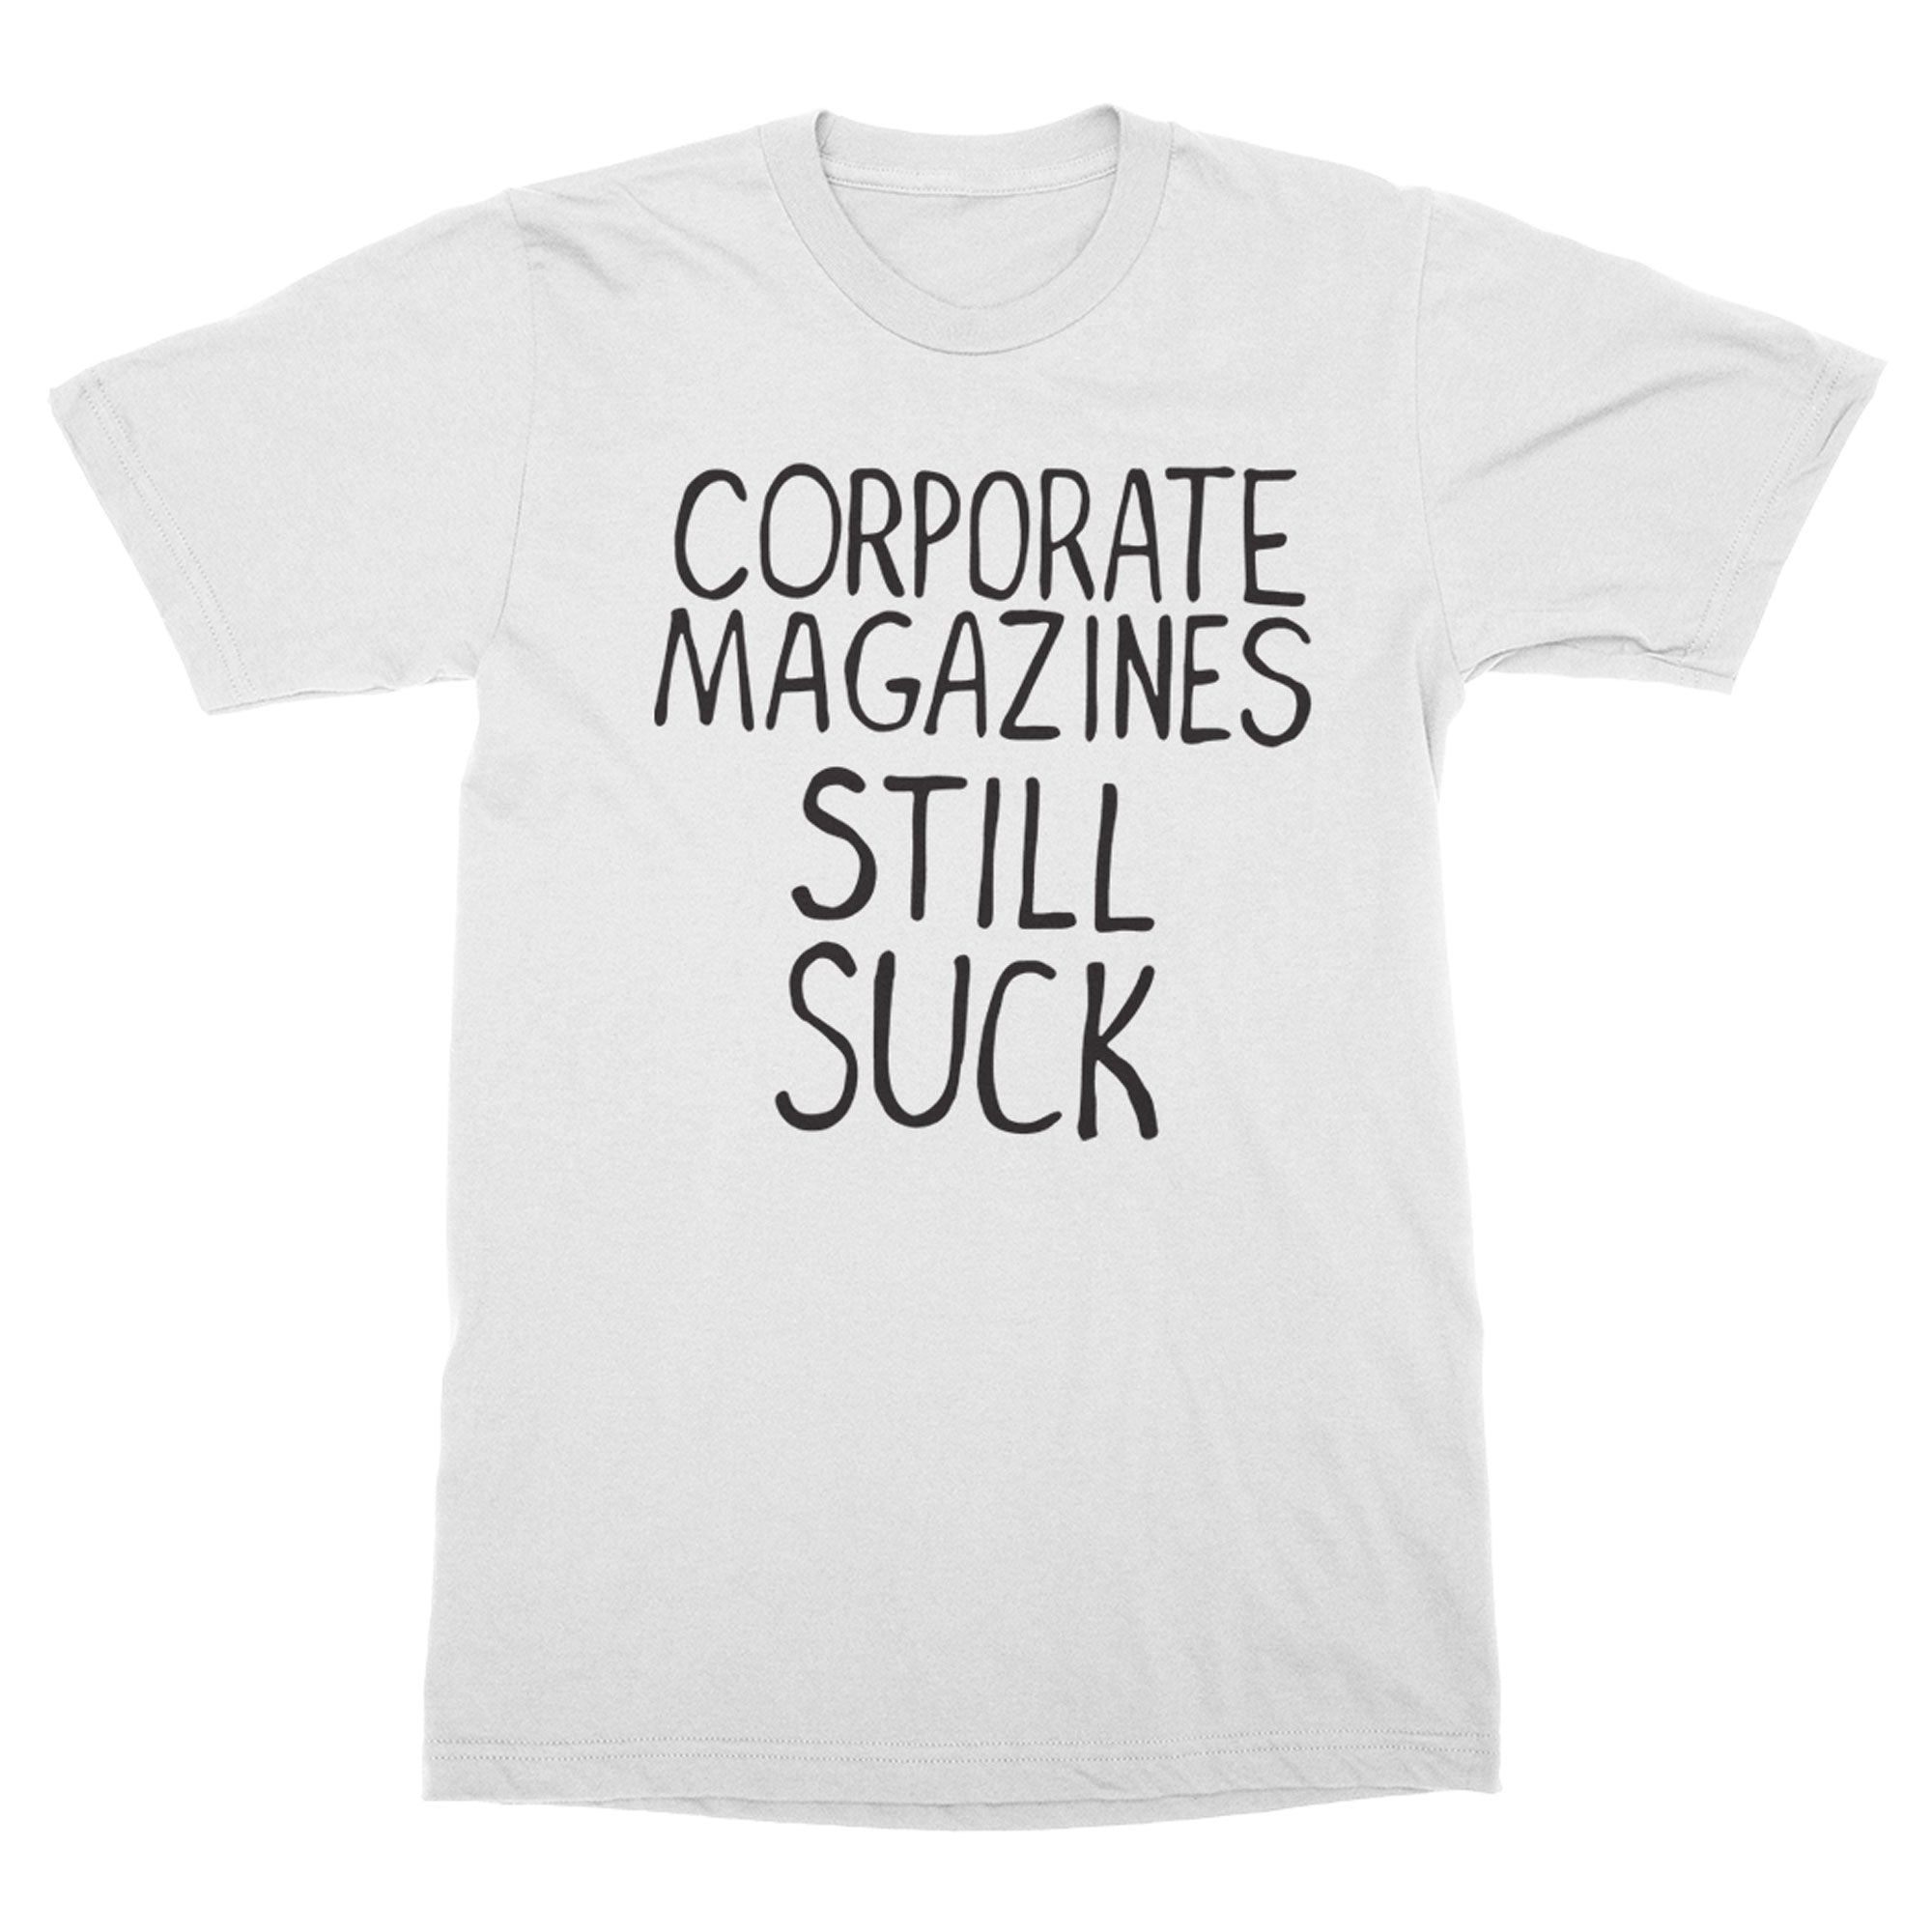 Corporate Magazines Still Suck 90s Grunge Vintage Shirt-T-Shirts-Shirtasaurus-Basic-S-White-Shirtasaurus